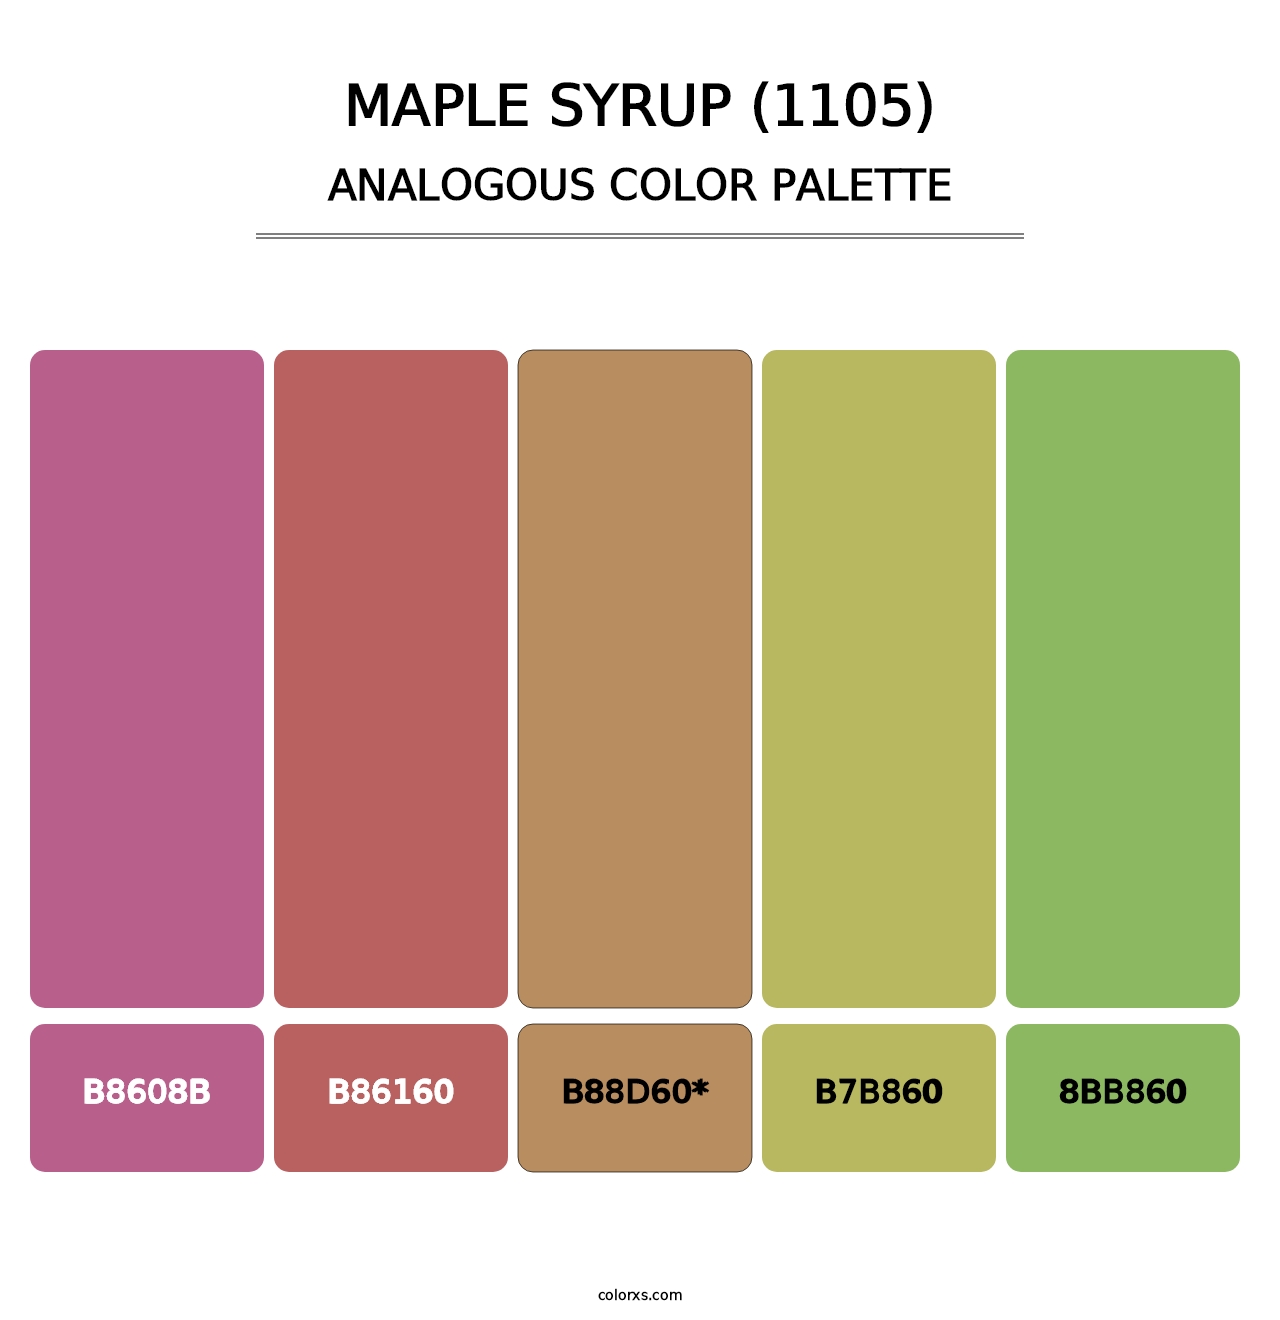 Maple Syrup (1105) - Analogous Color Palette